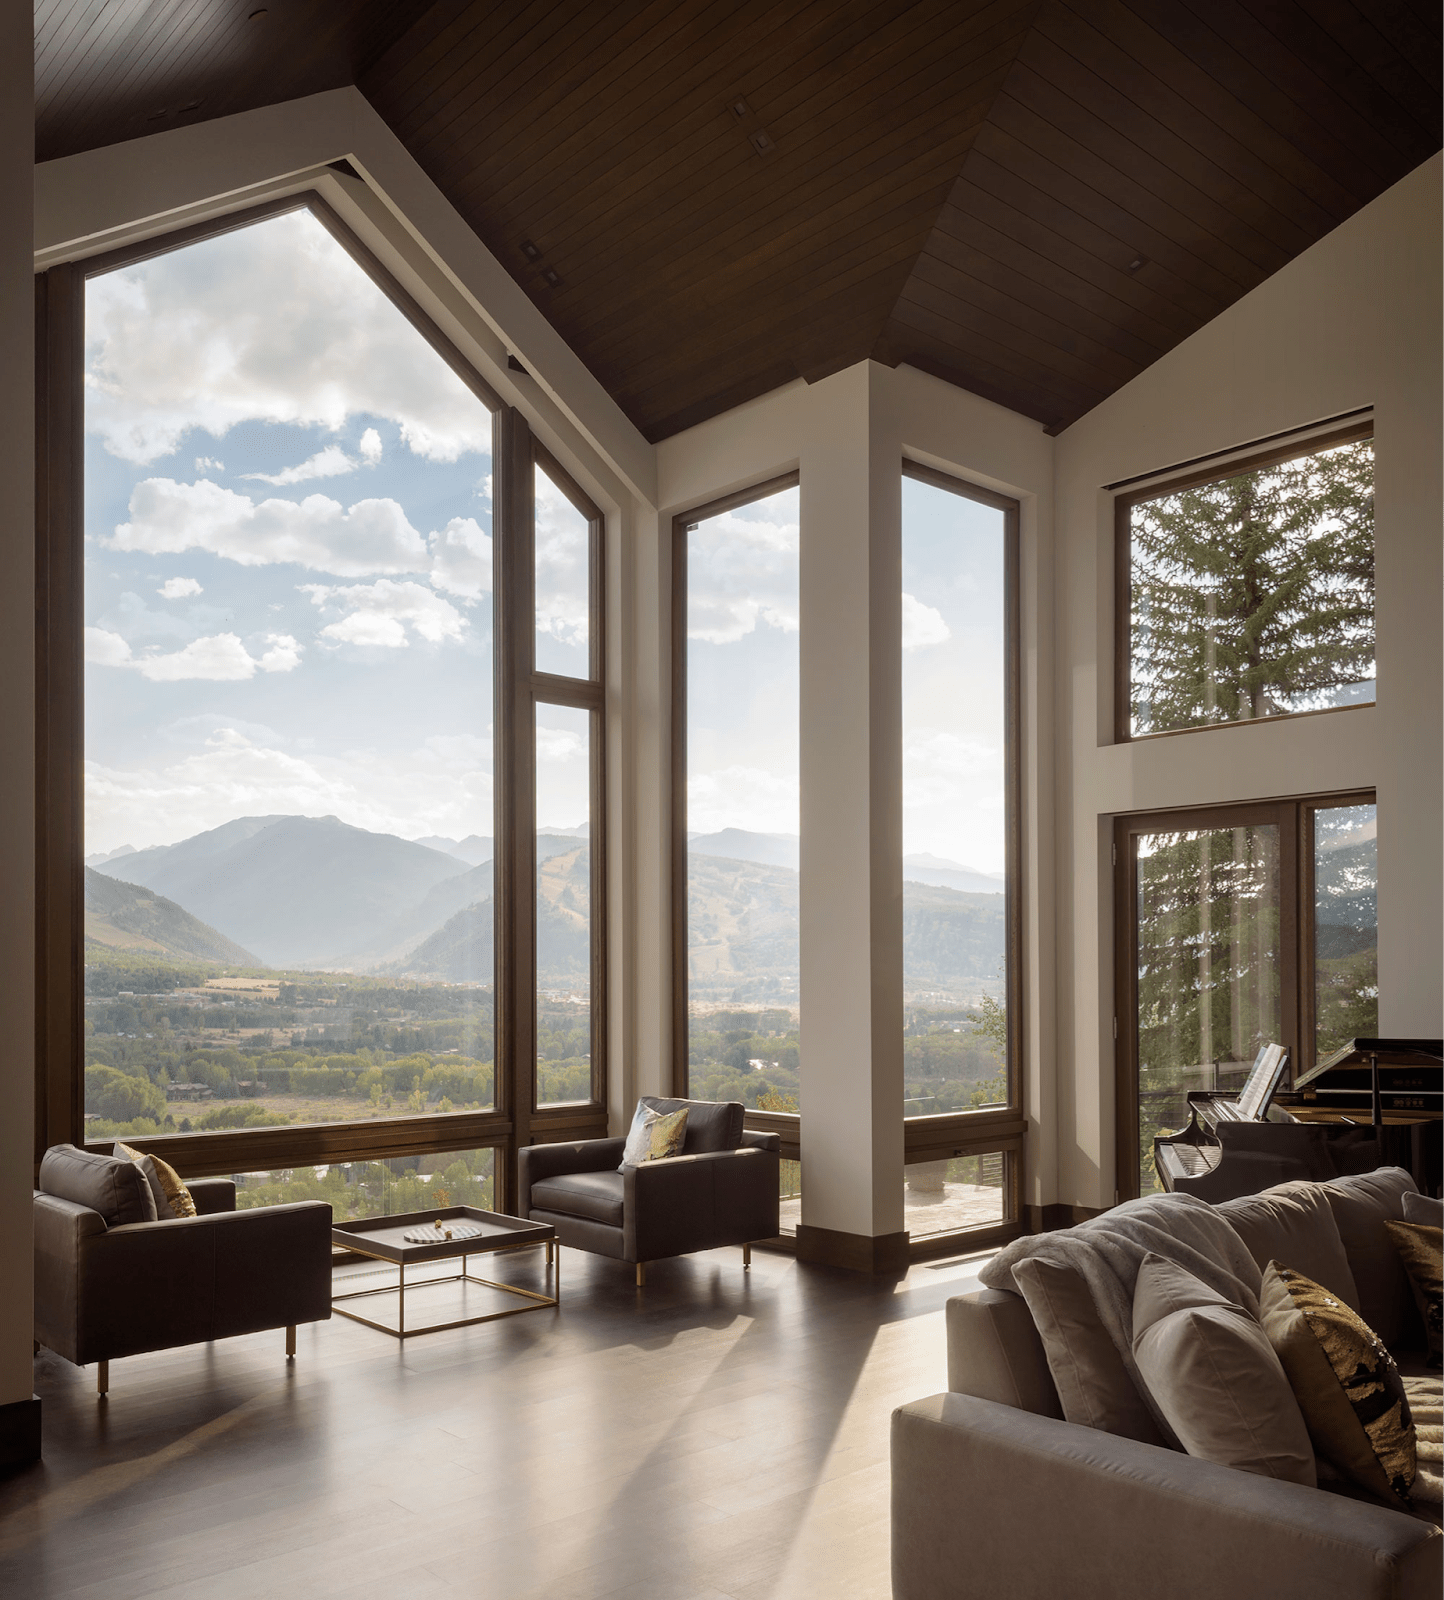 Apexed floor-to-ceiling window overlooking the great outdoors.